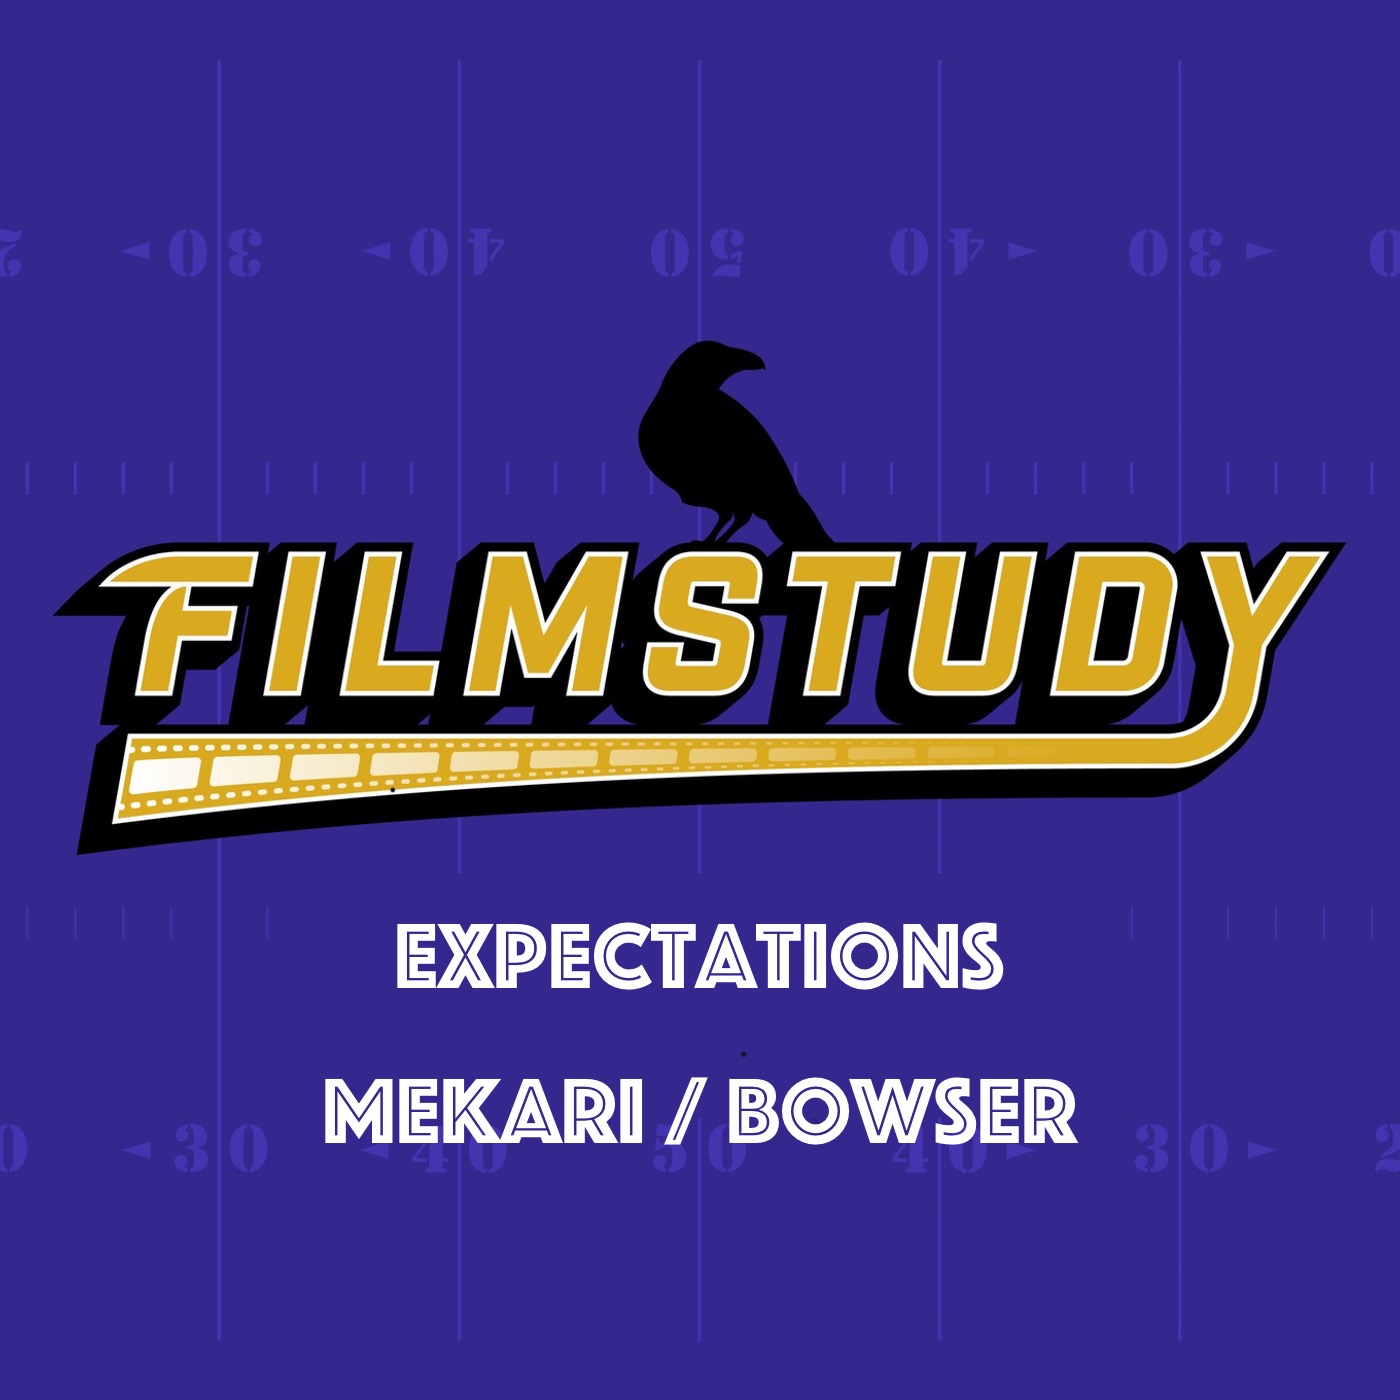 Expectations Mekari / Bowser